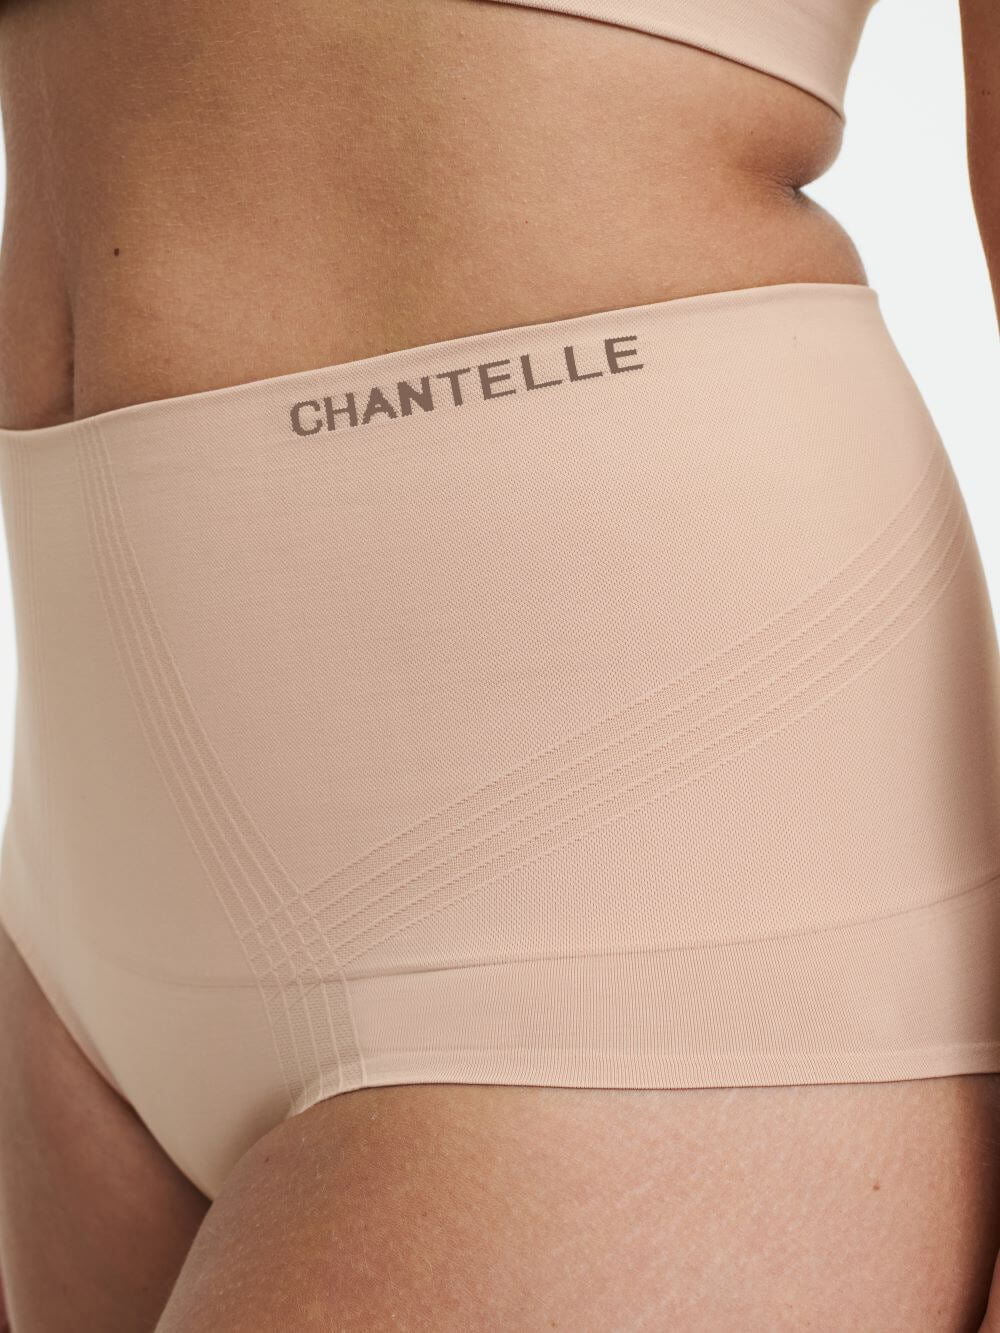 145088 | Chantelle - Smooth Comfort Hud.